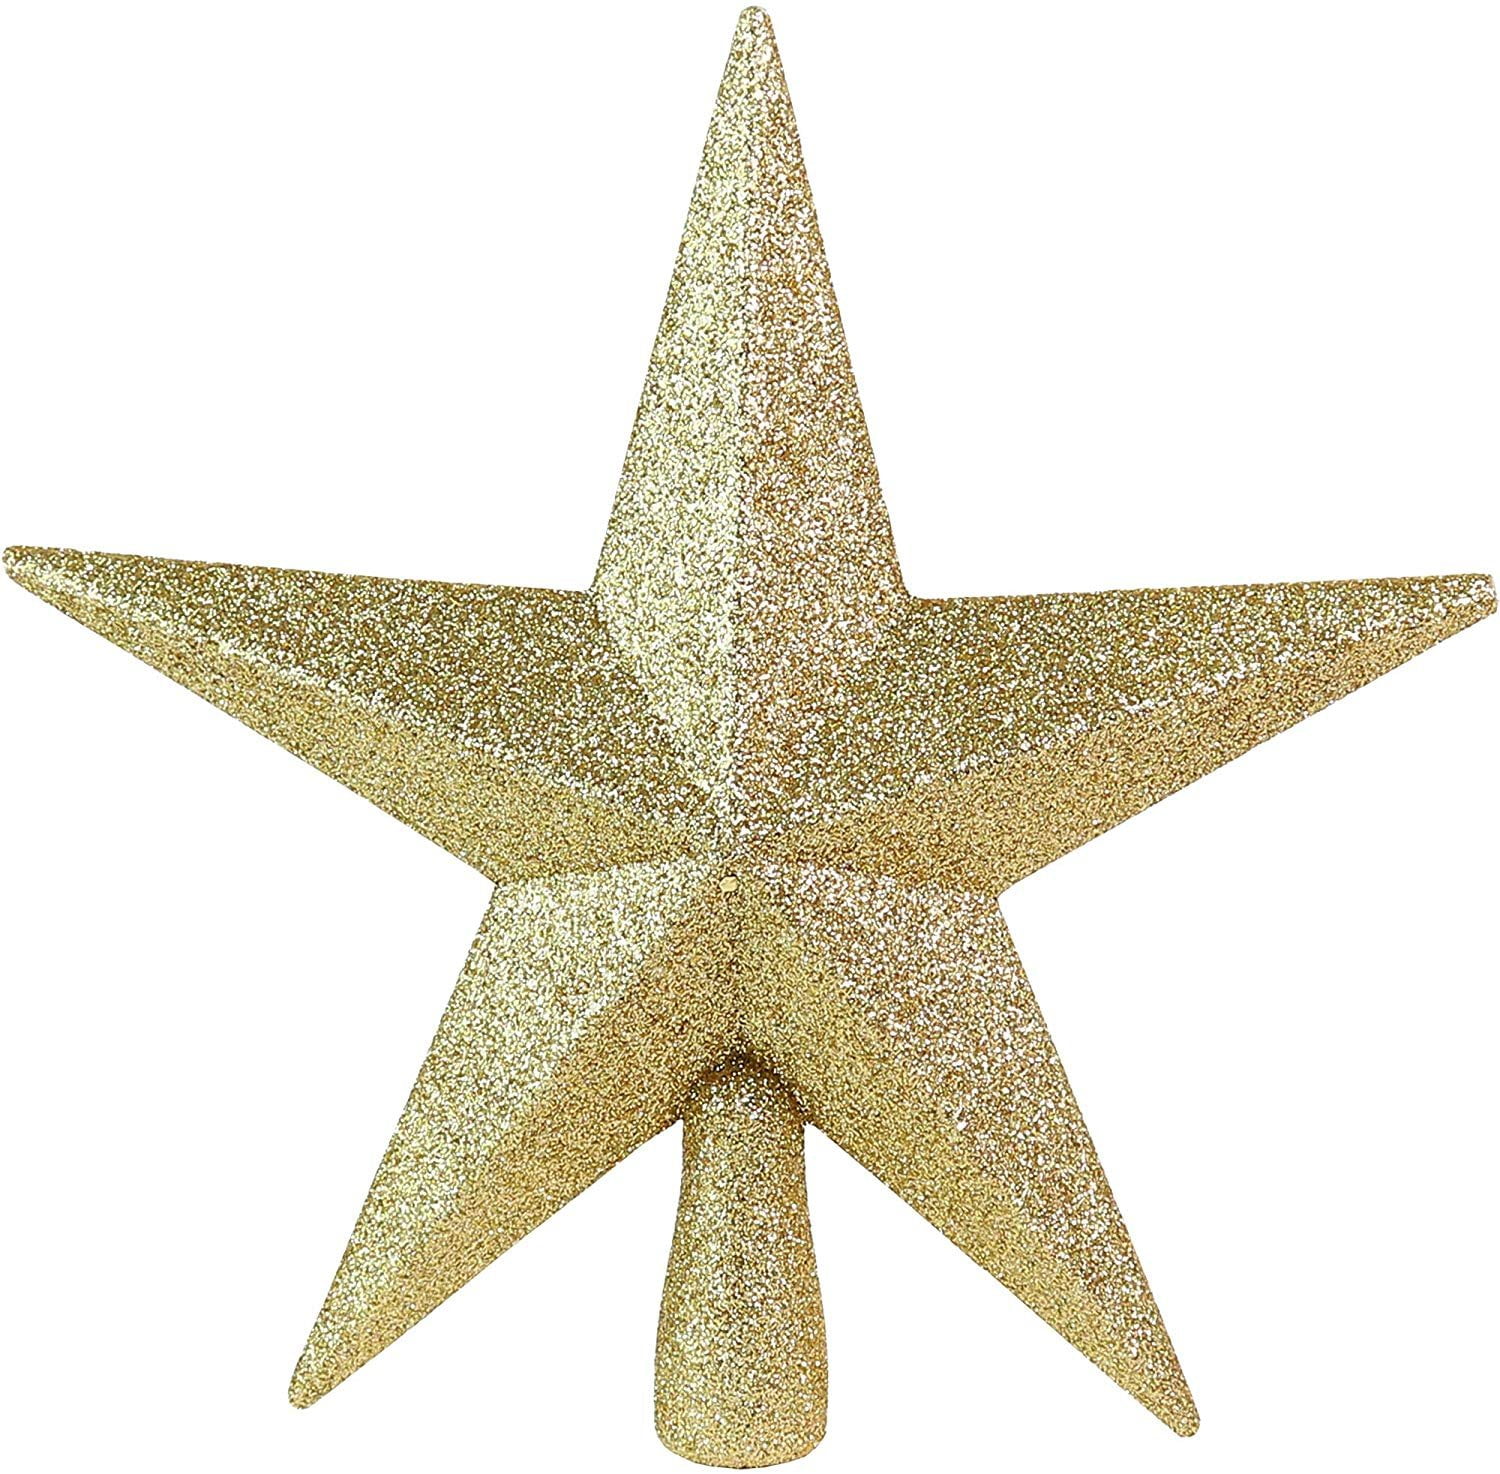 Ornativity Glitter Star Tree Topper Christmas Gold Decorative Holiday